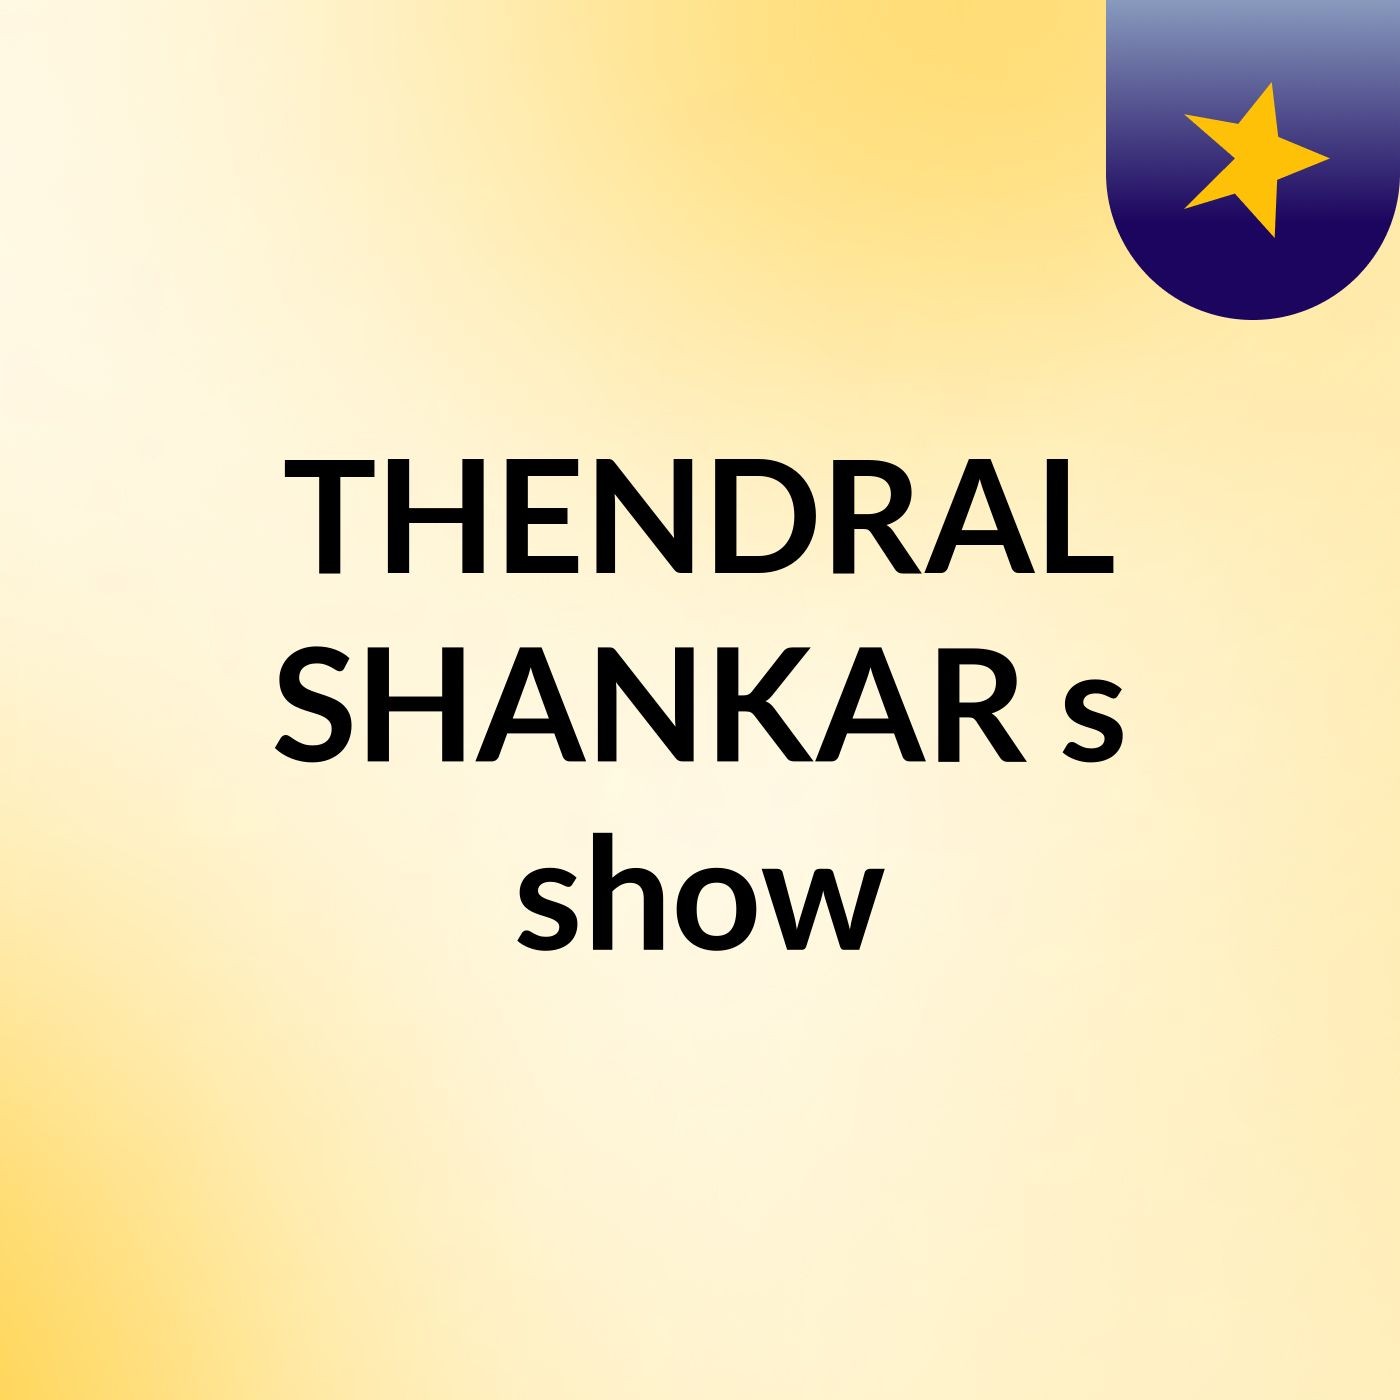 THENDRAL SHANKAR's show